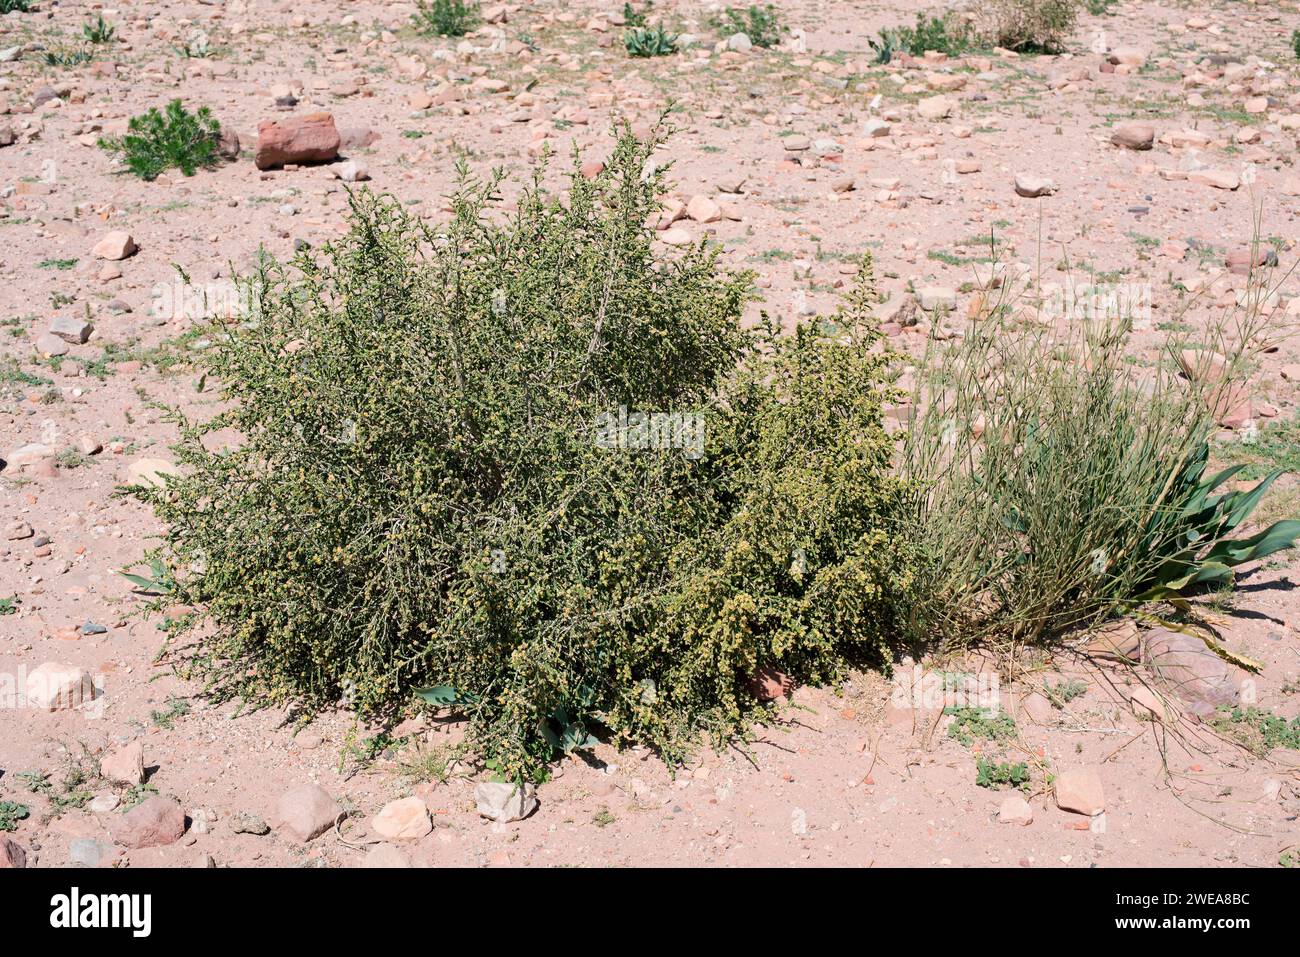 Mitnan (Thymelaea hirsuta) is a perennial shrub native to Mediterranean Basin coasts. This photo was taken in Jordan. Stock Photo